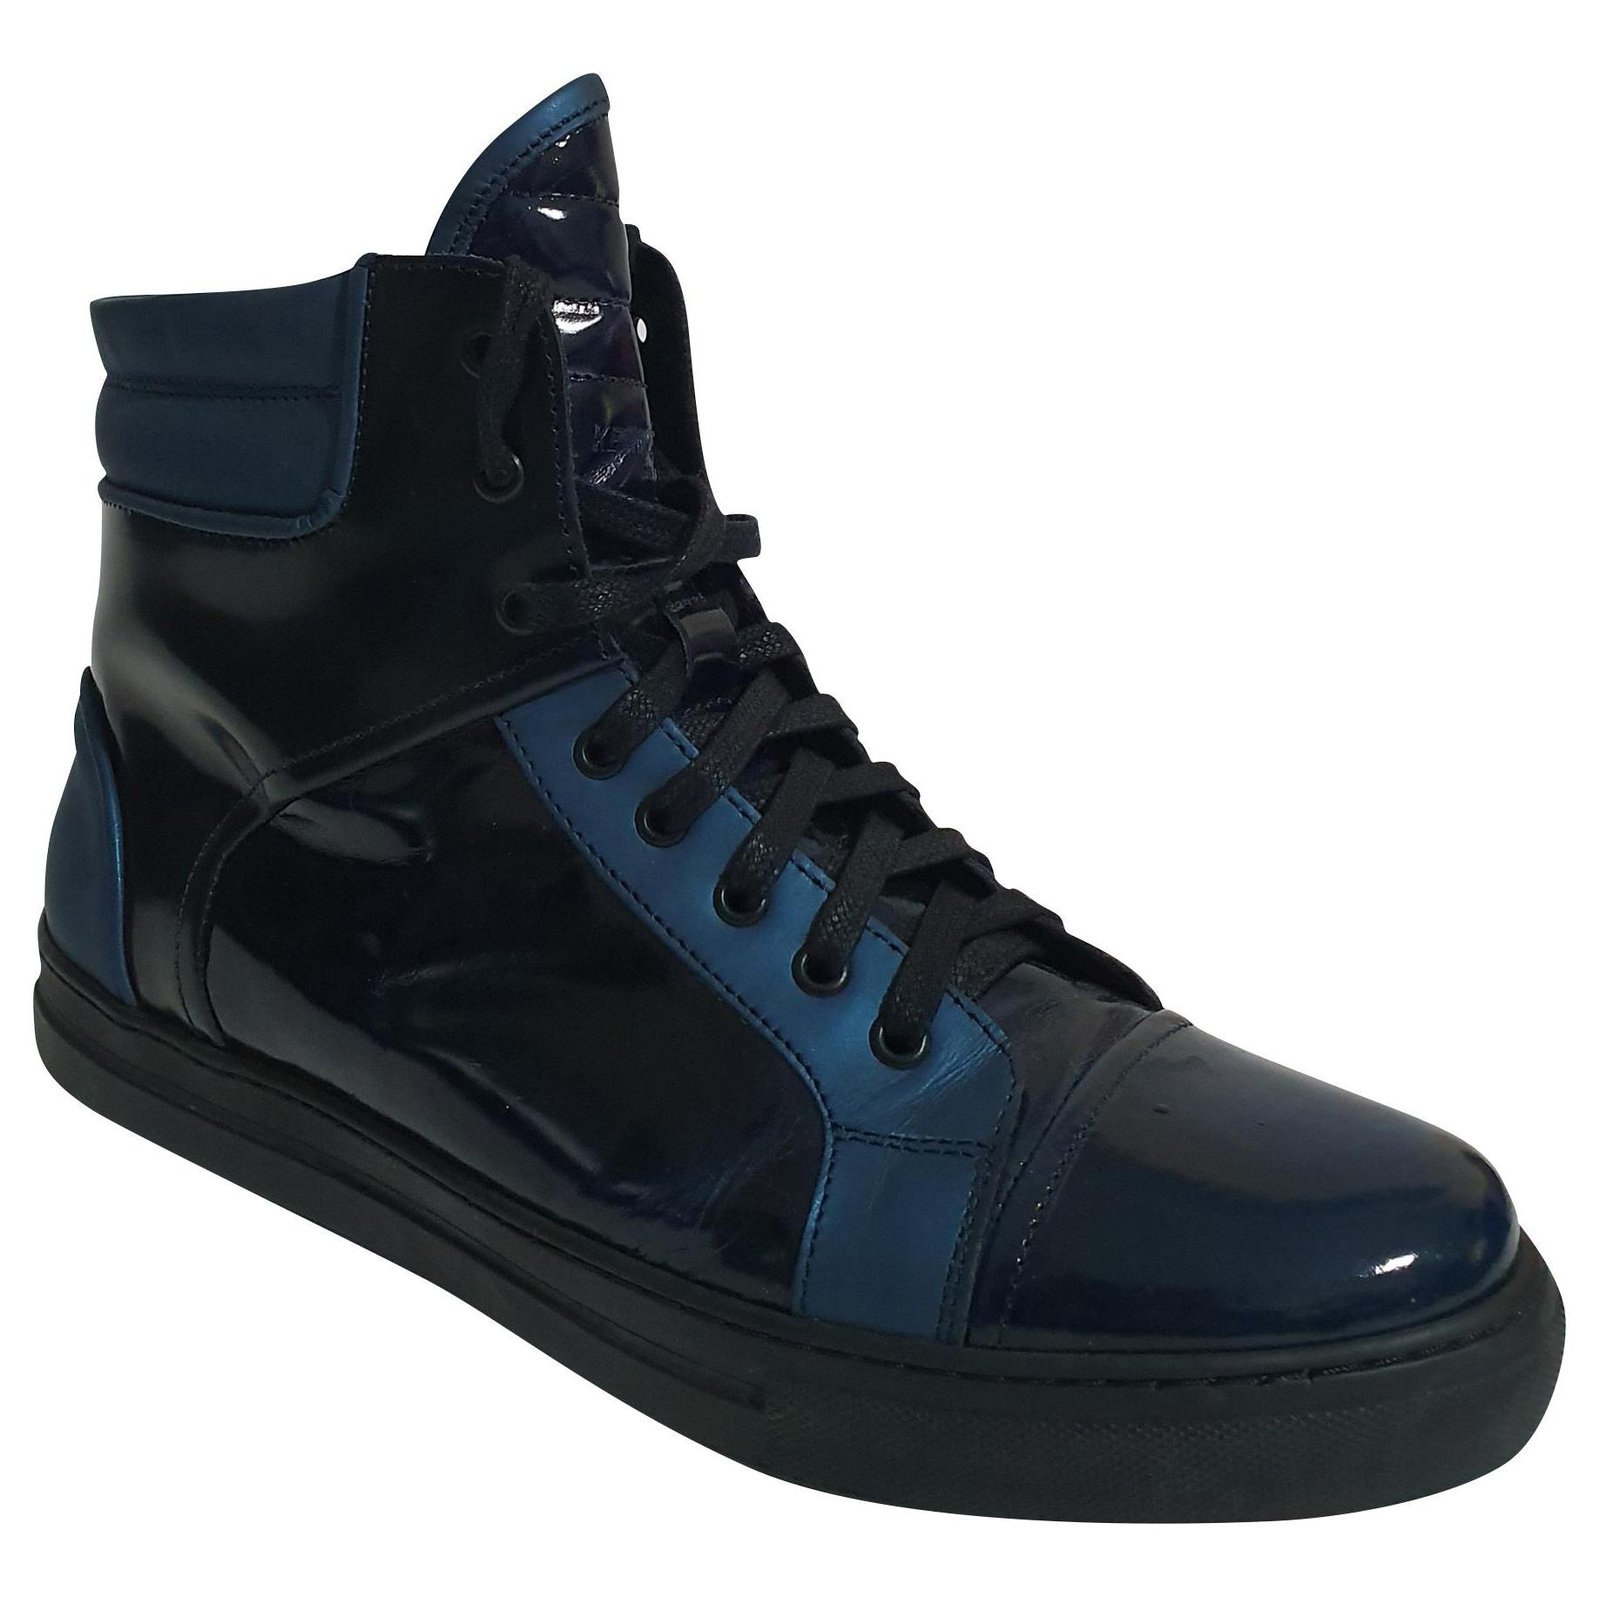 Kenneth Cole New York Men's Brand Wagon Fashion Sneaker - Grey | Discount Kenneth  Cole Men's Shoes & More - Shoolu.com | Shoolu.com